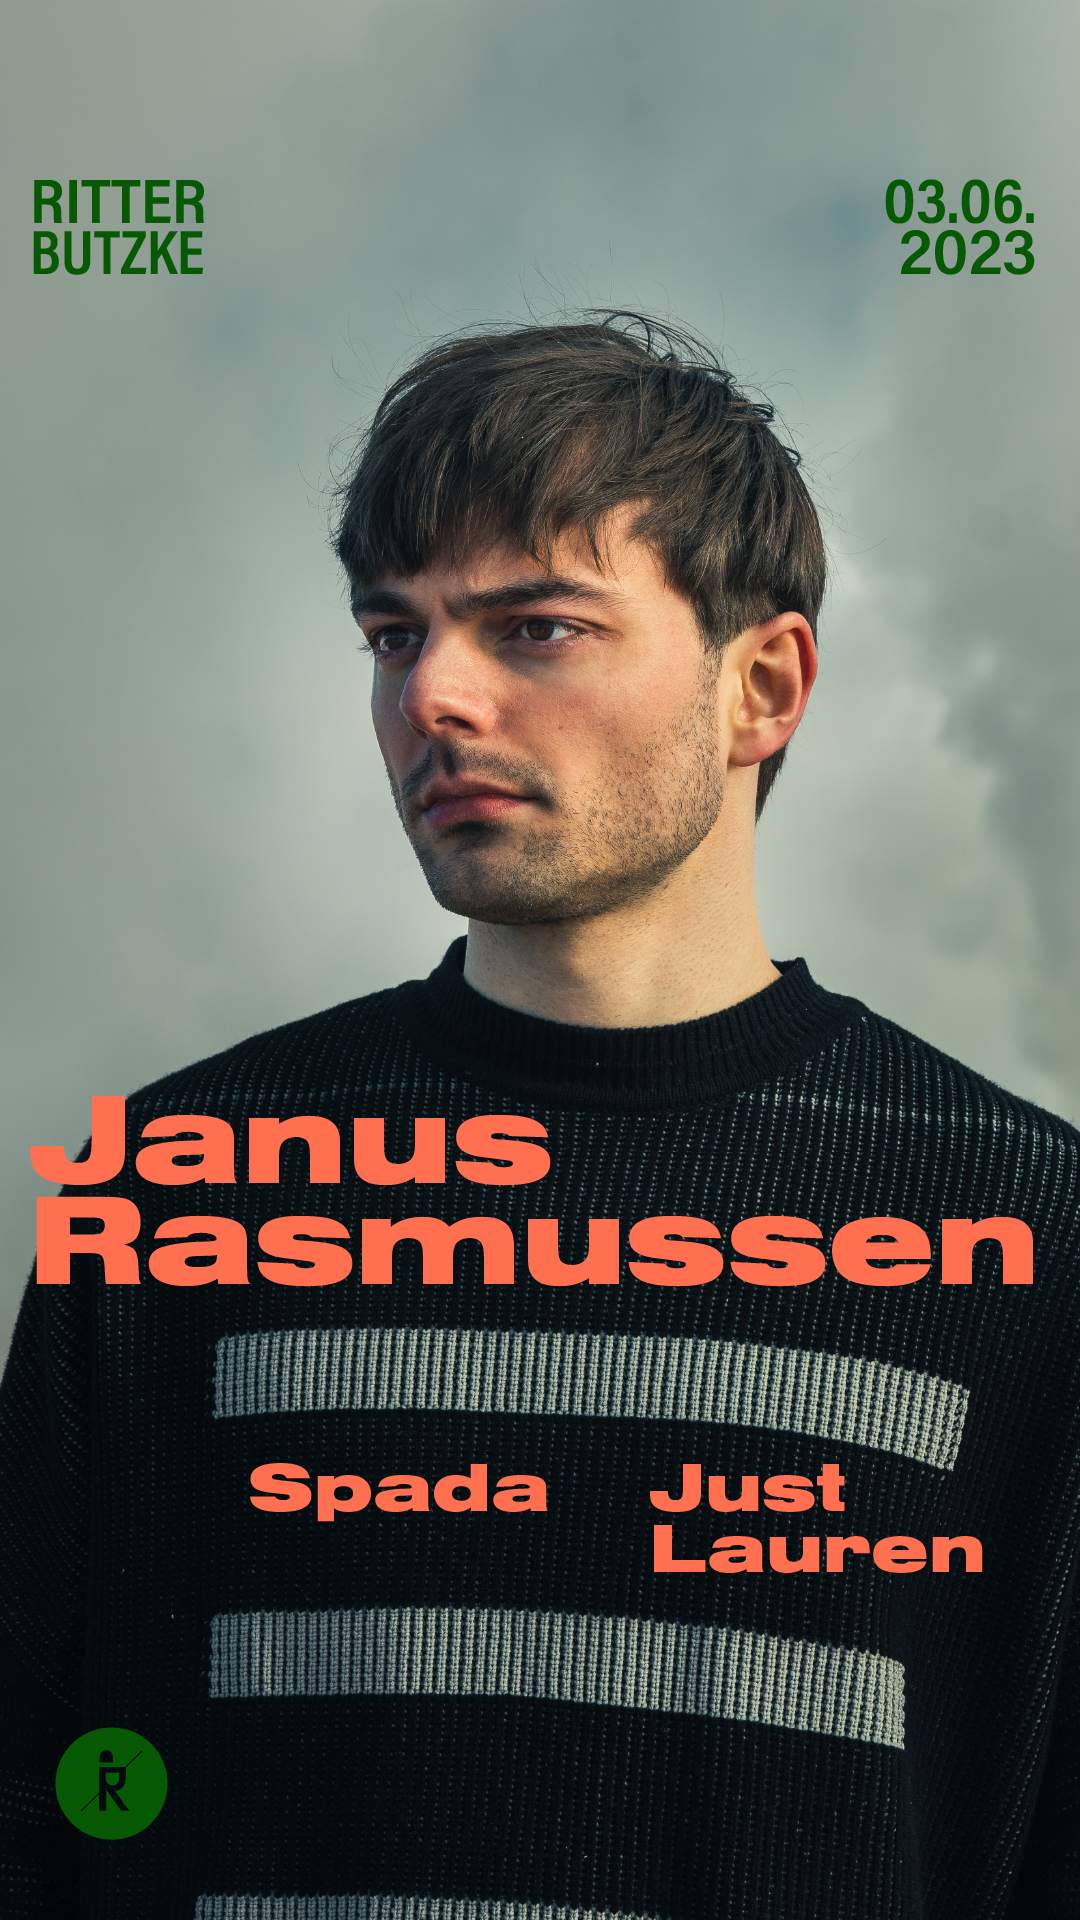 Janus Rasmussen - フライヤー裏